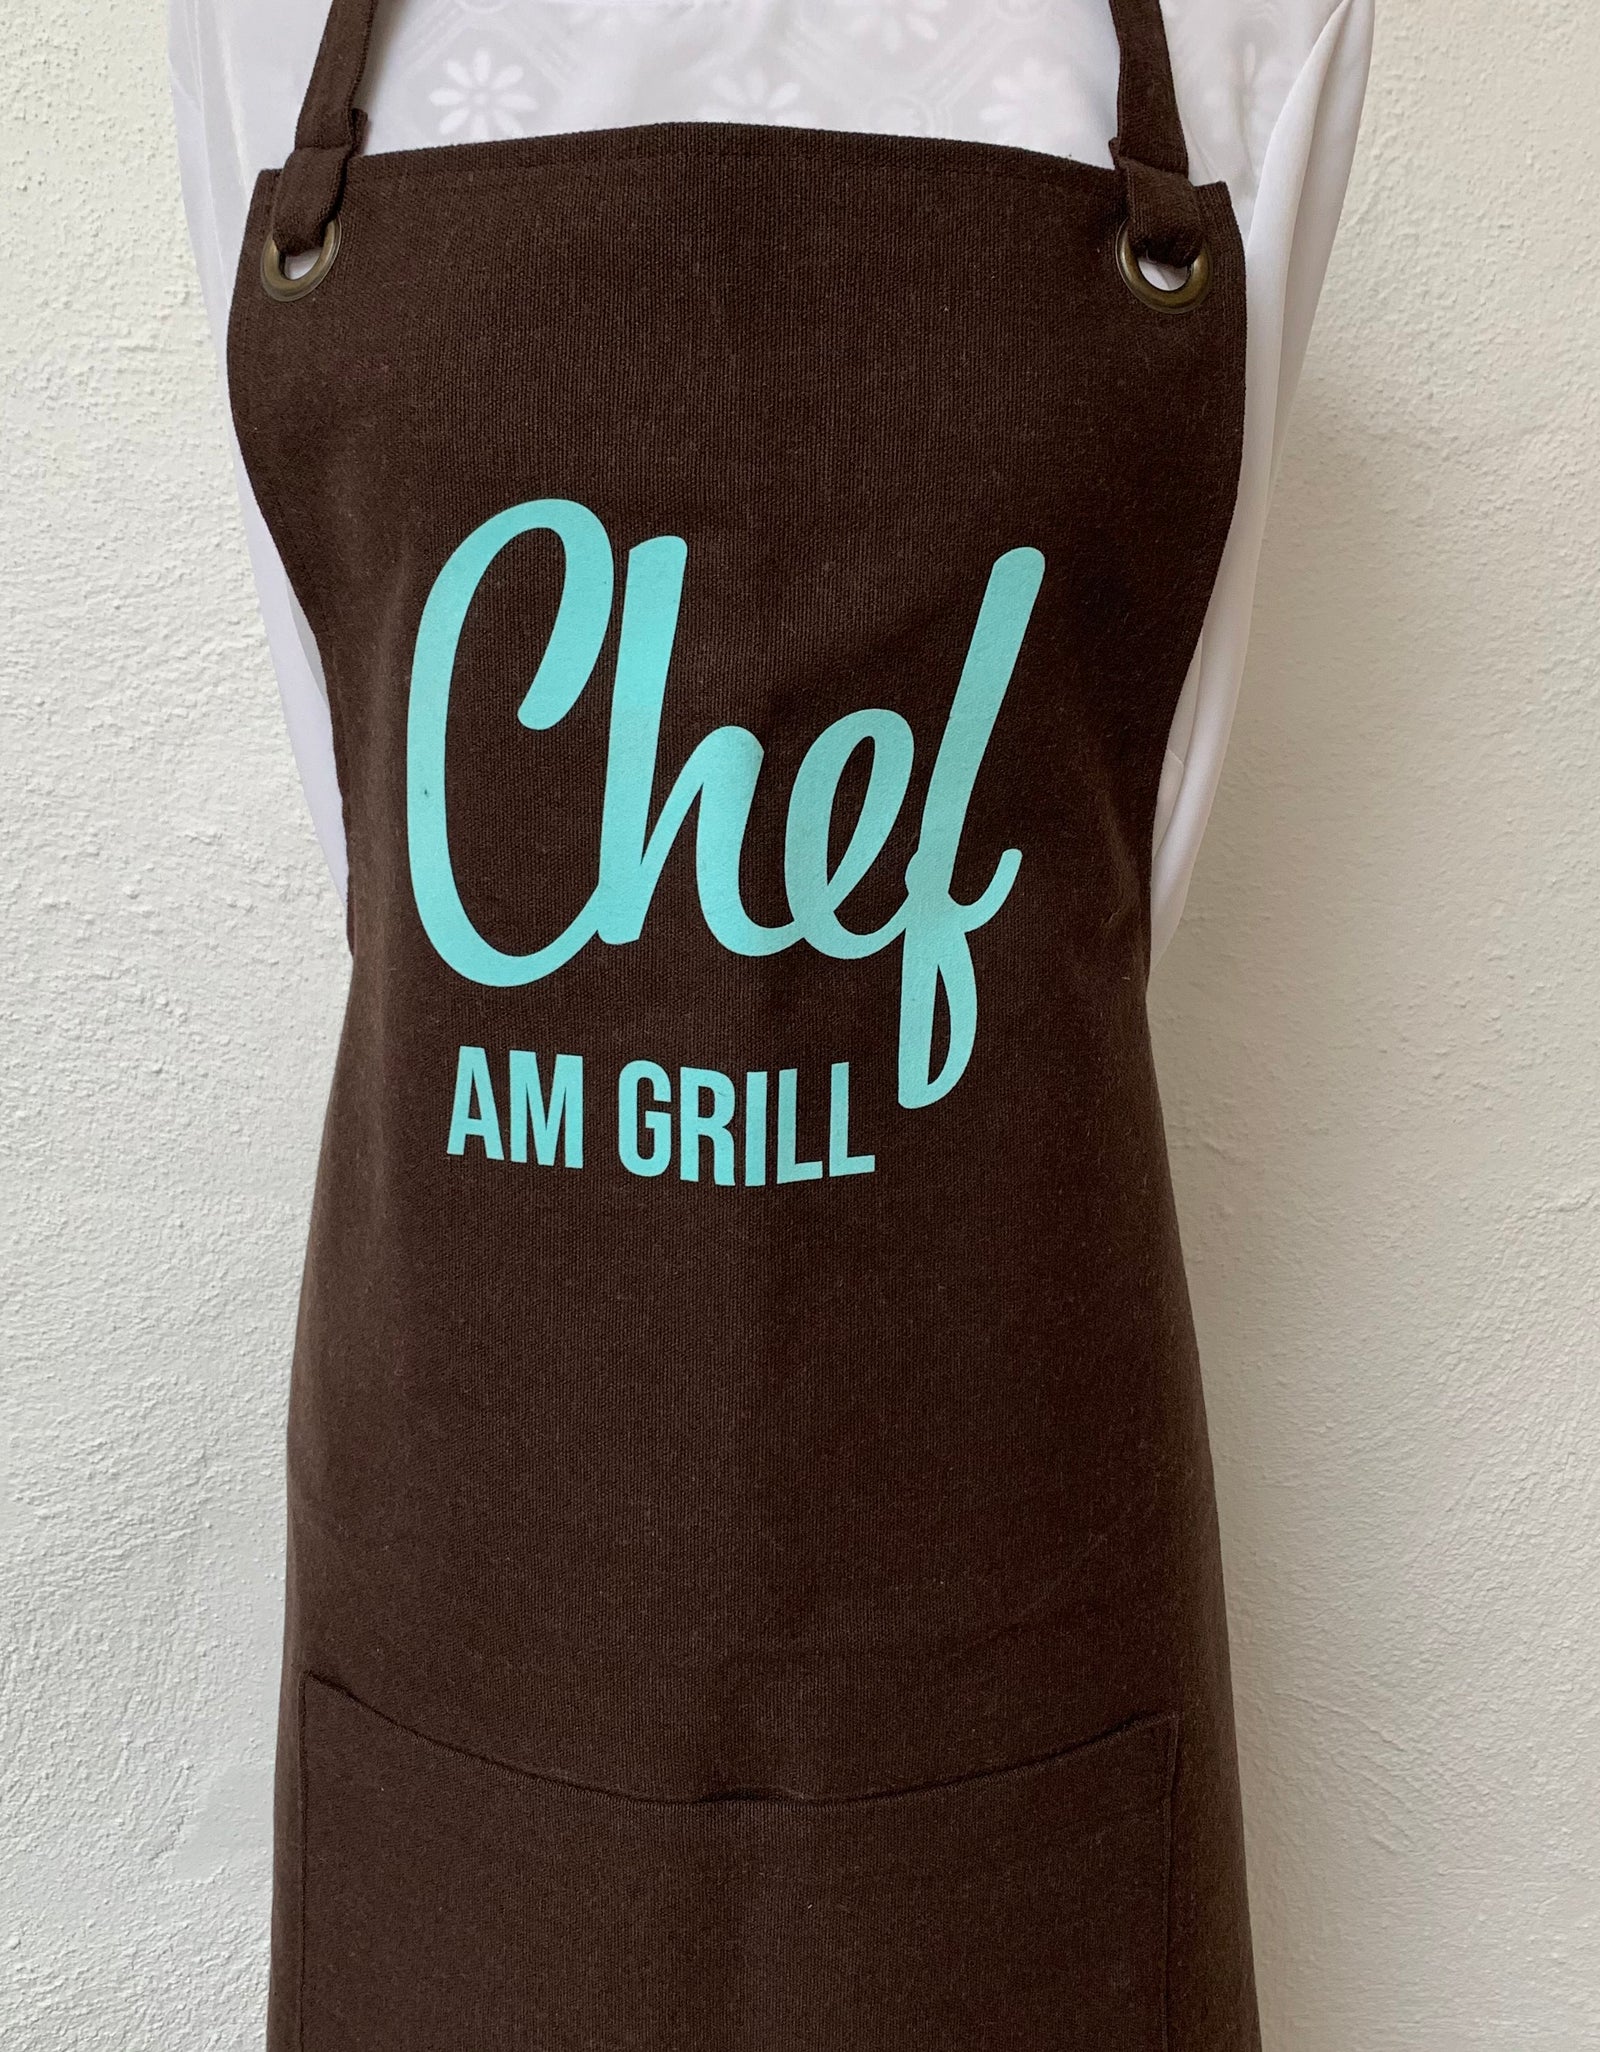 Schürze "Chef am Grill" / Tablier